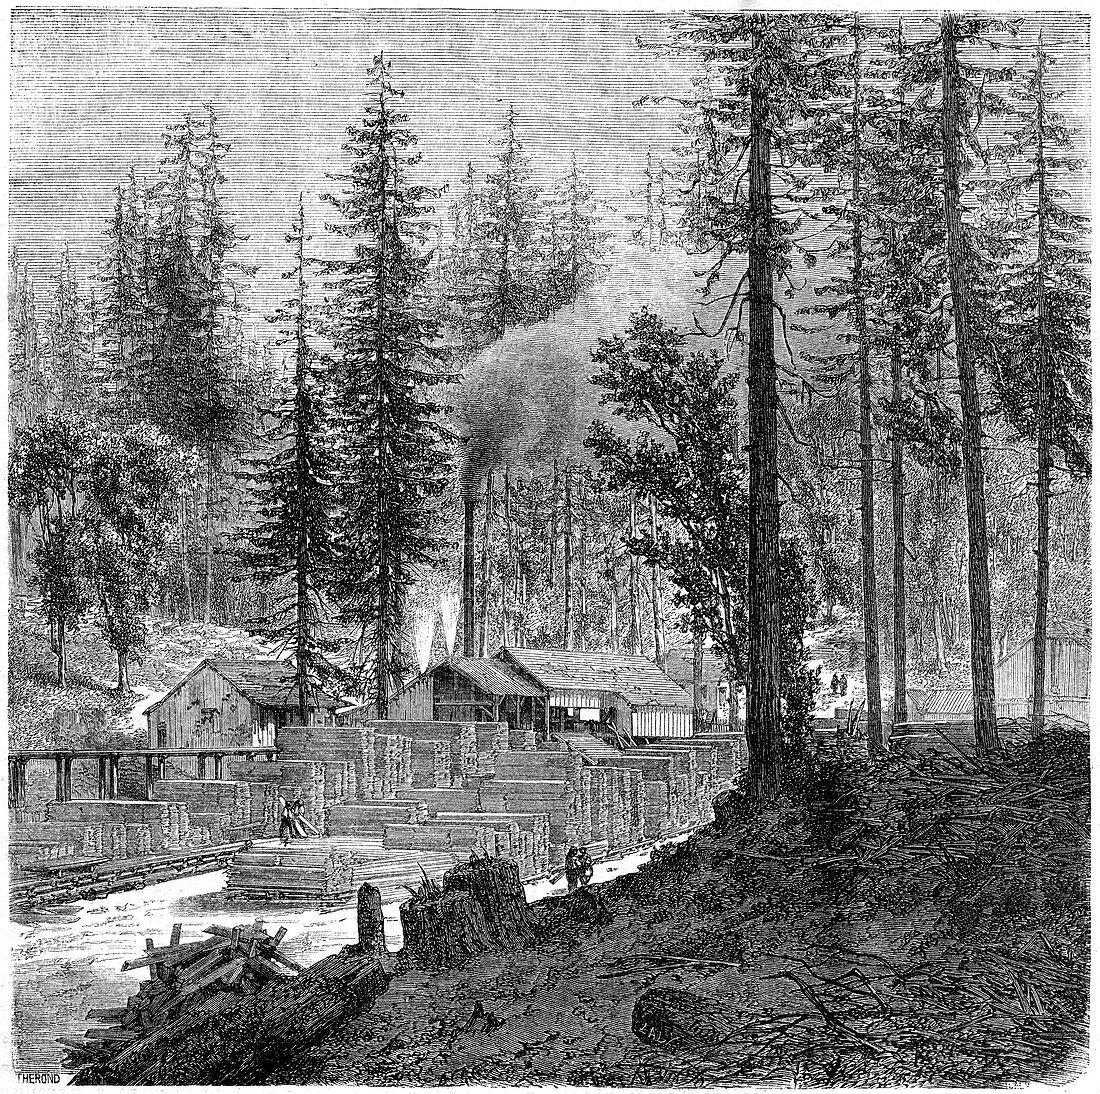 Sawmill', California, 19th century